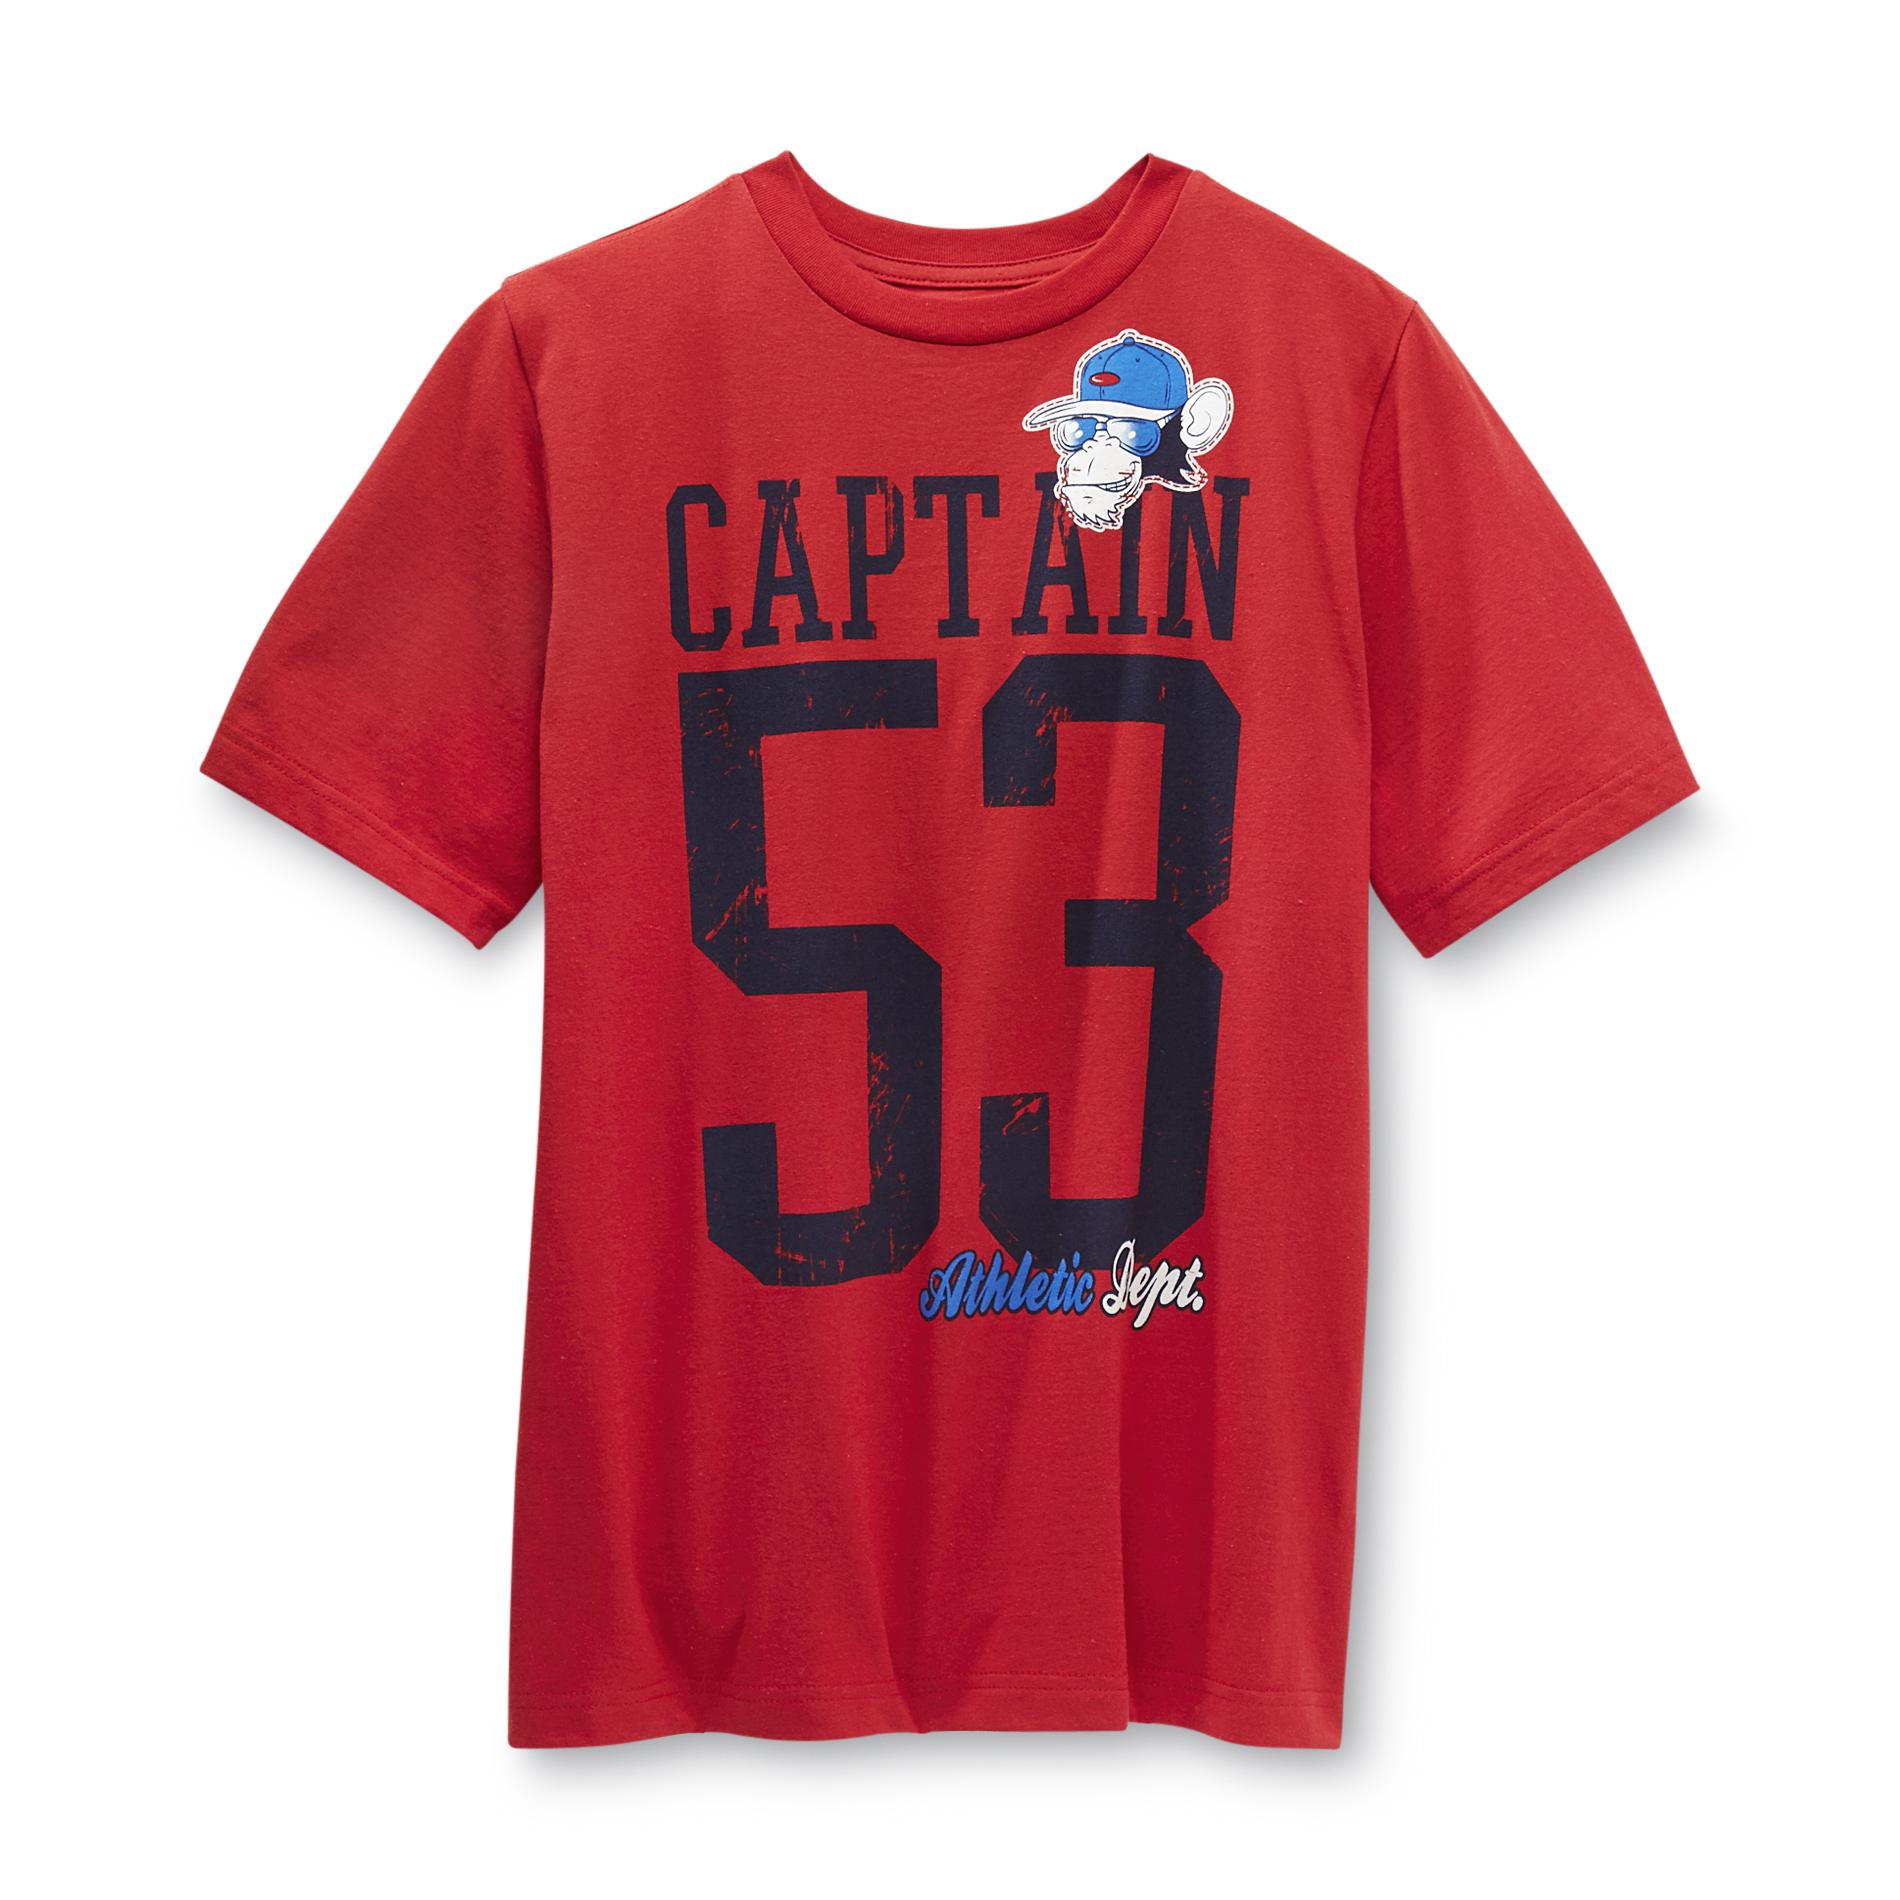 Basic Editions Boy's Graphic T-Shirt - Captain 53 Athletic Dept.